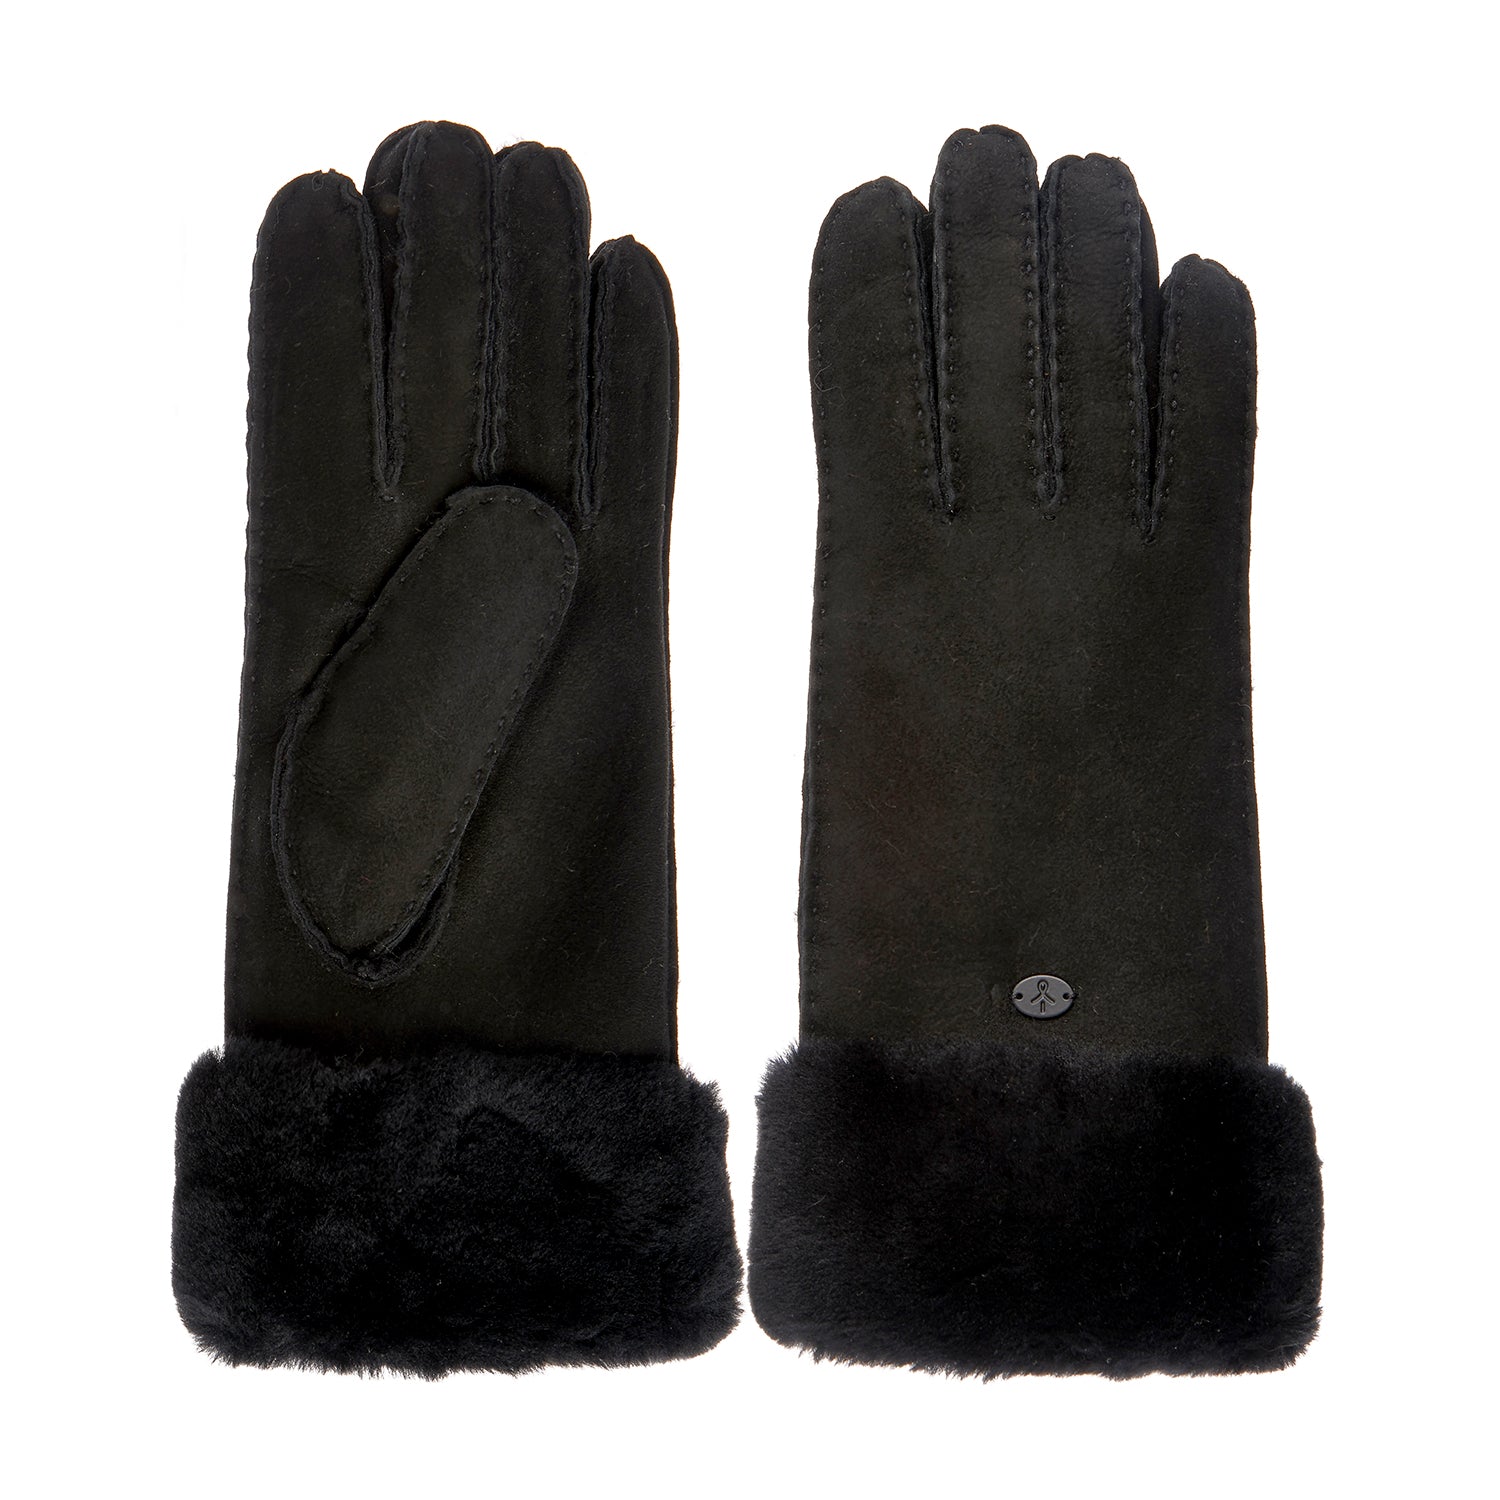 Apollo Bay Gloves - Black